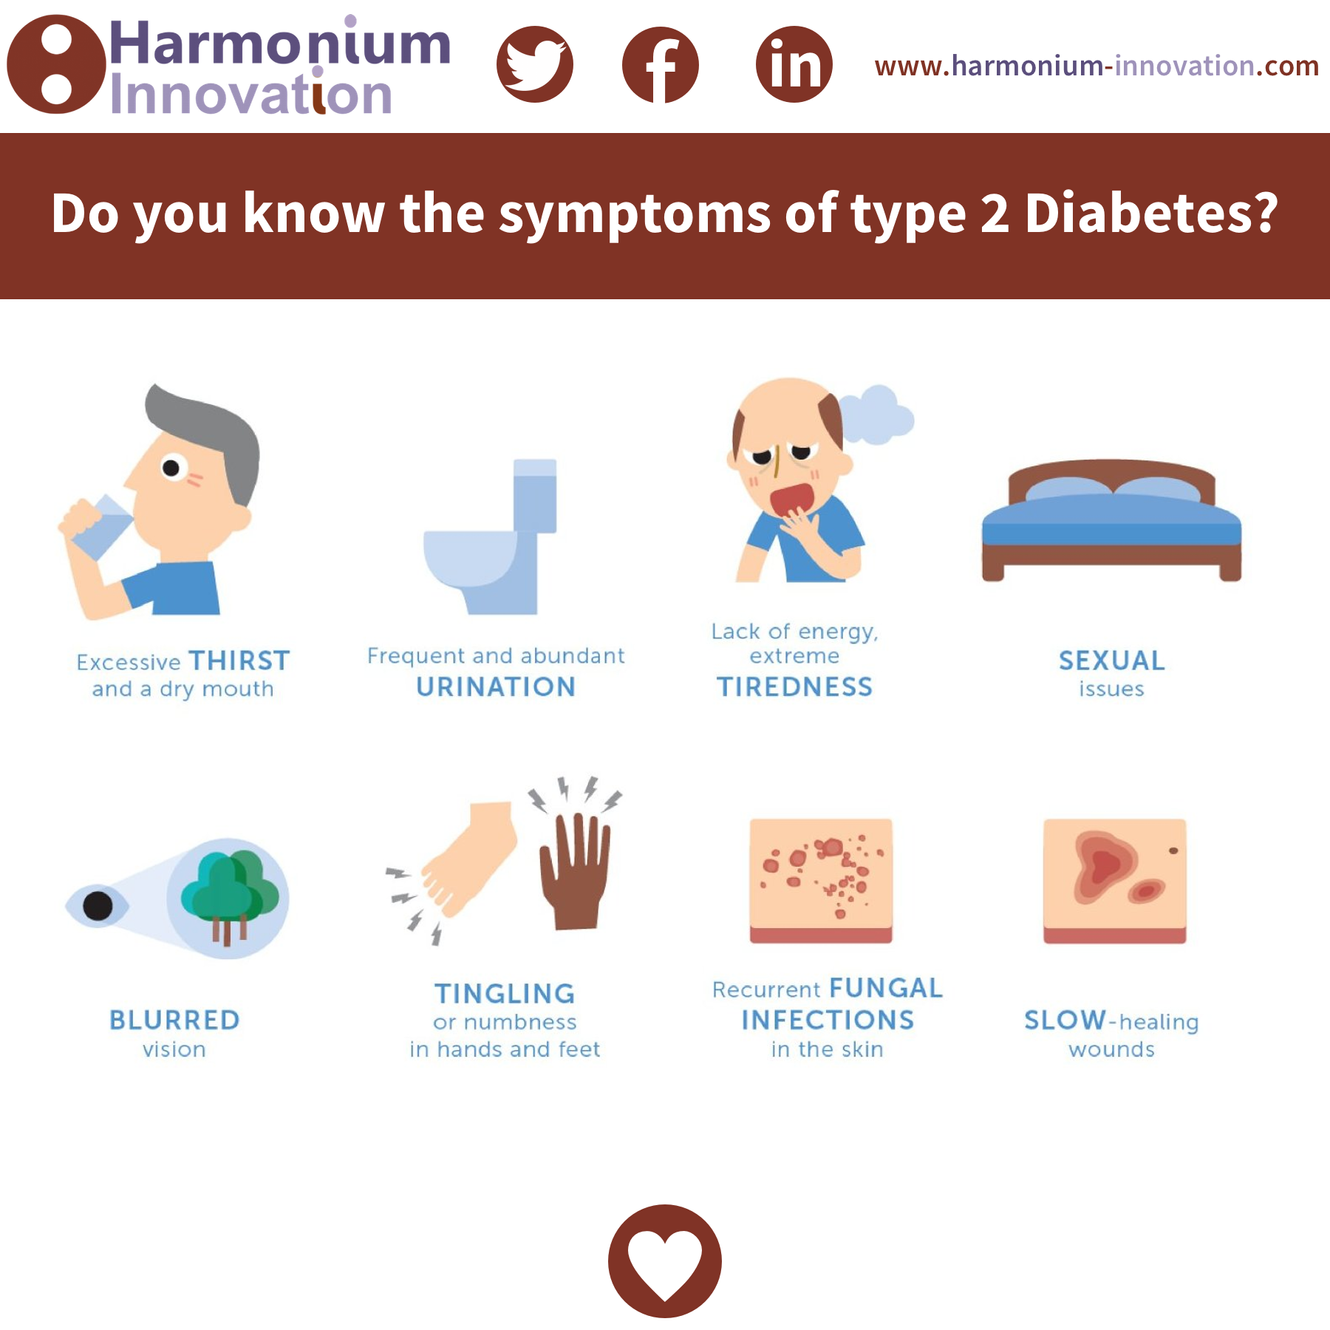 Do you know the symptoms of type 2 Diabetes?